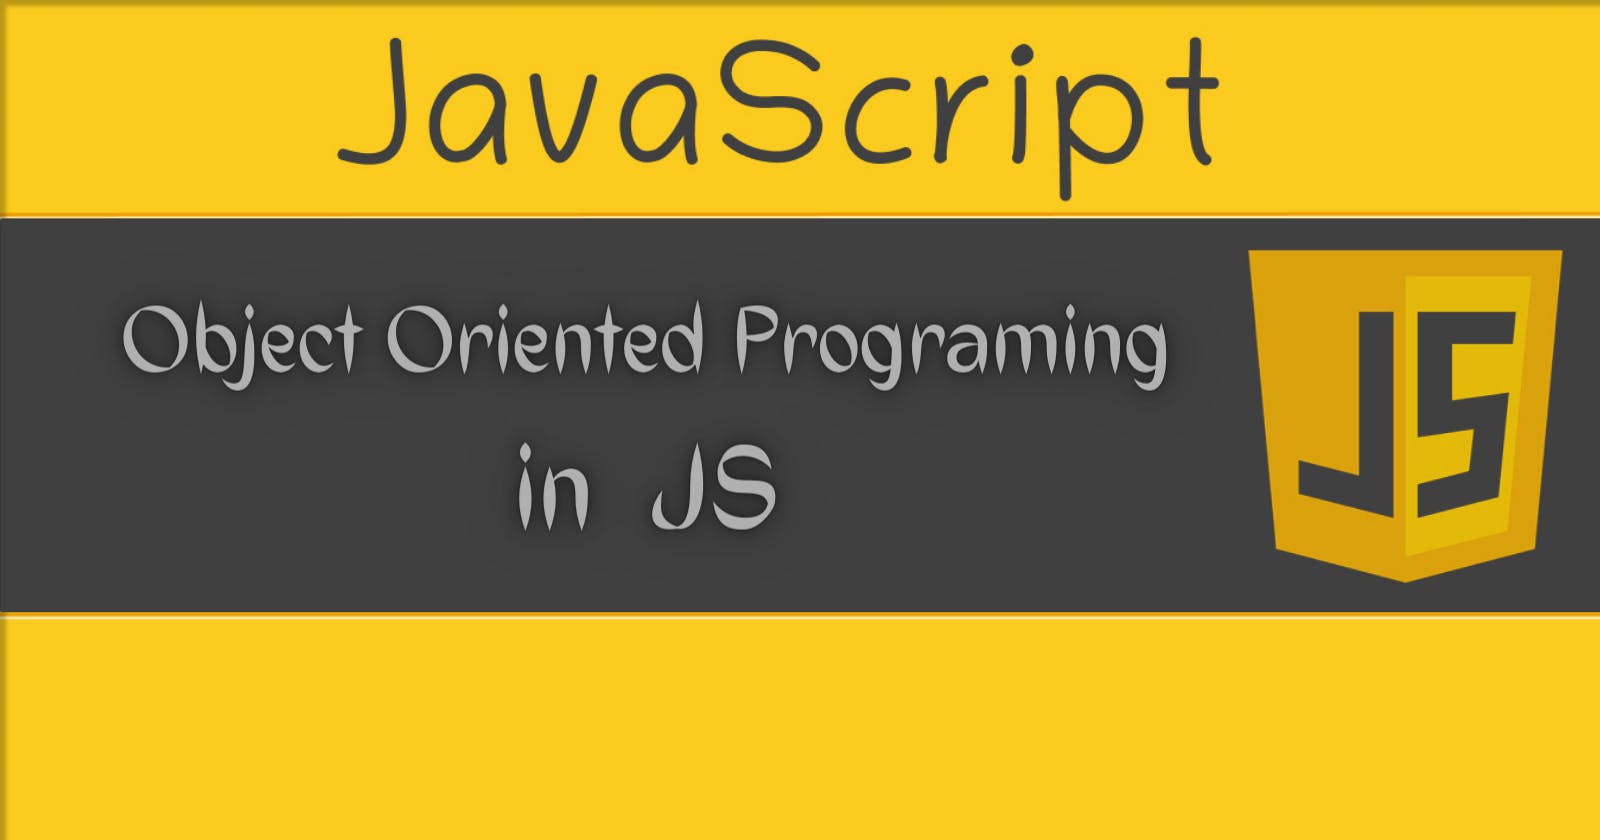 Object-Oriented Programming in JS